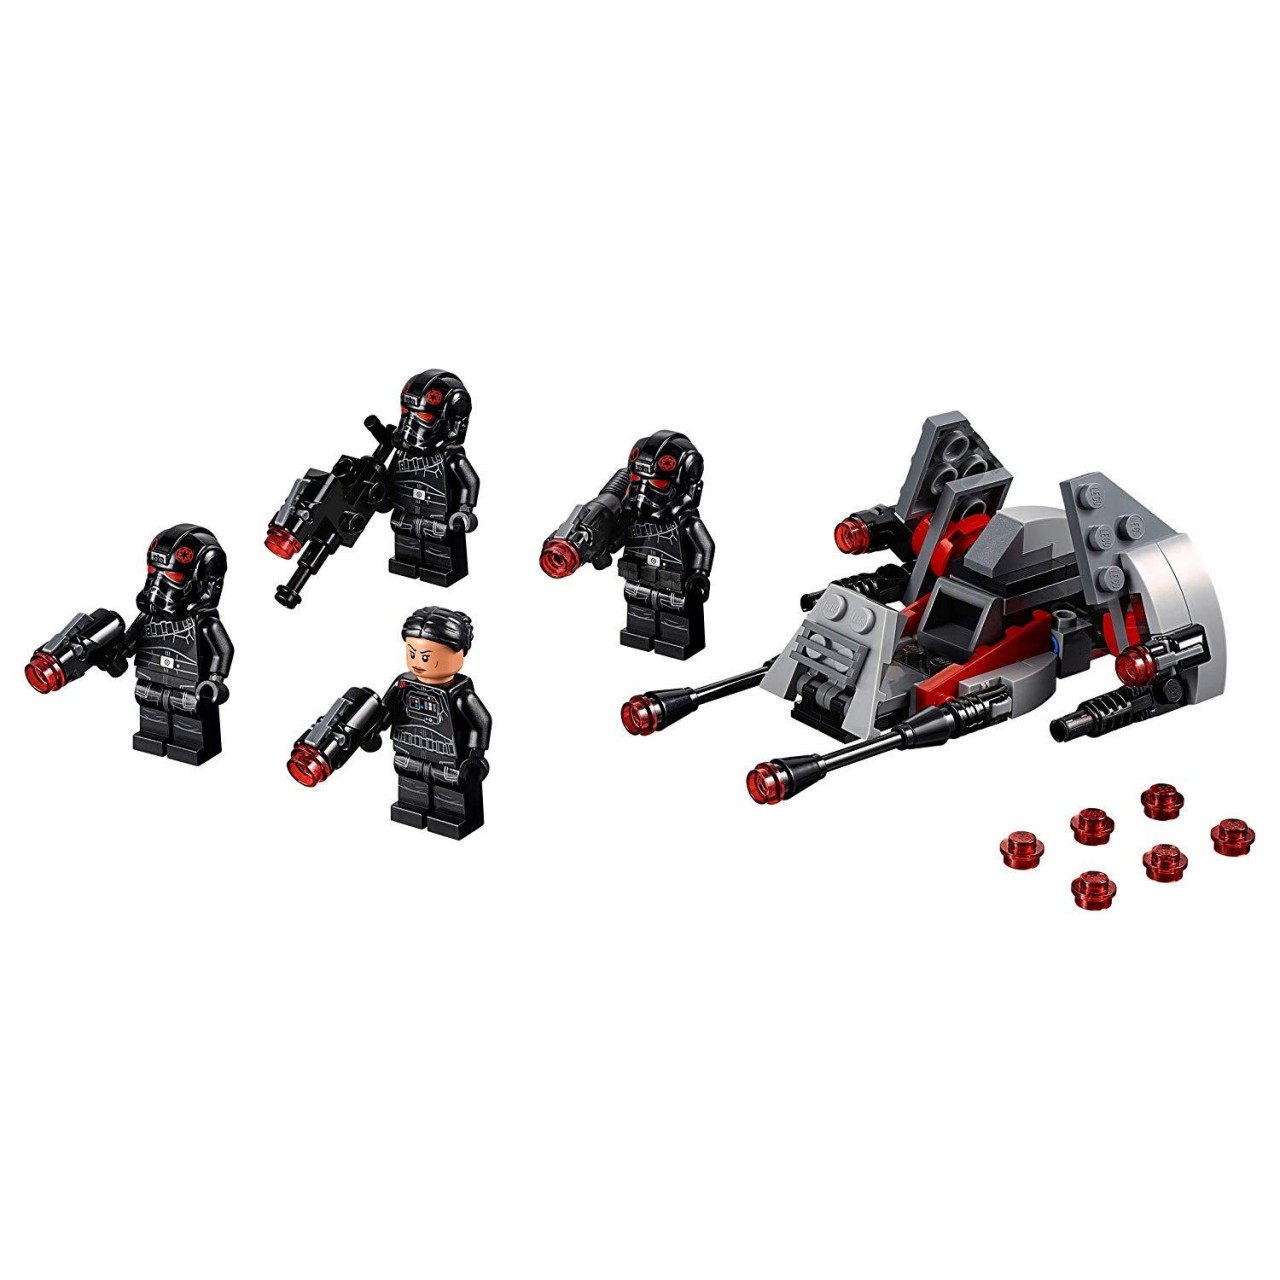 LEGO STAR WARS 75226 Inferno Squad Battle Pack